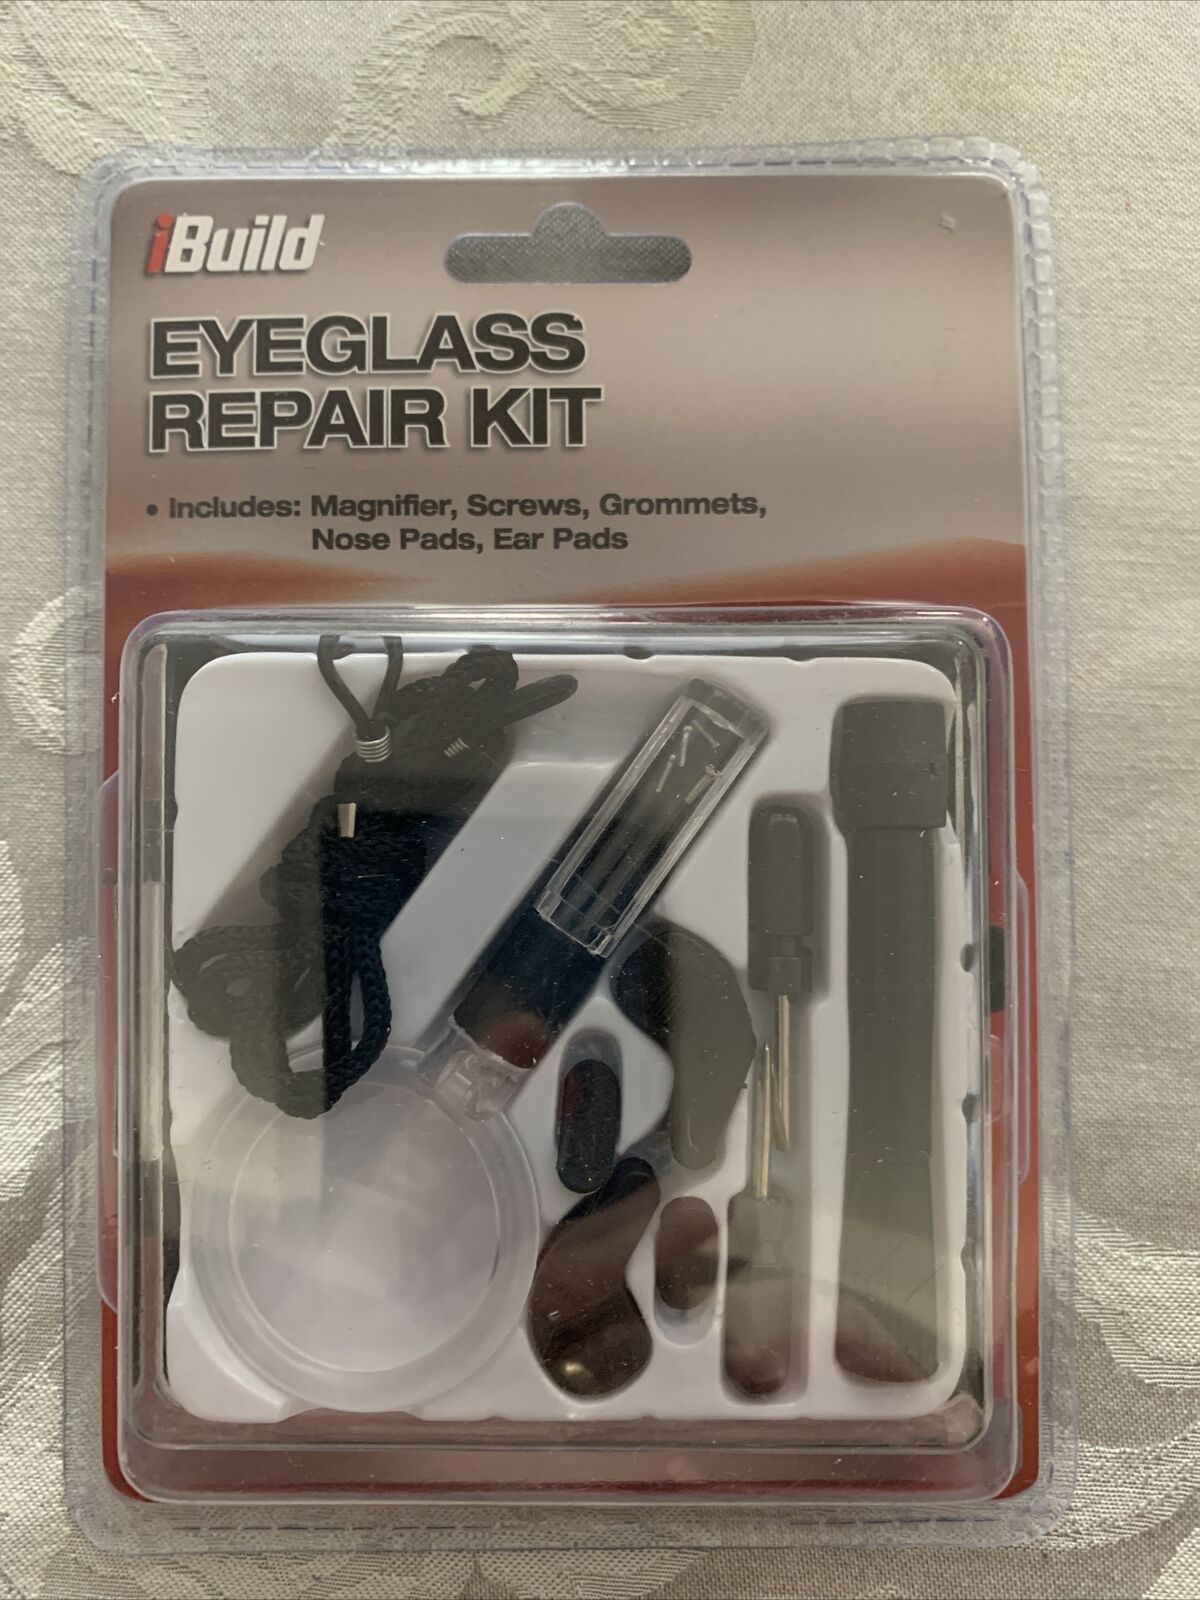 Build Eye Glass Repair Kit Includes Magnifier, Screws, Grommets, Nose/ear Pads